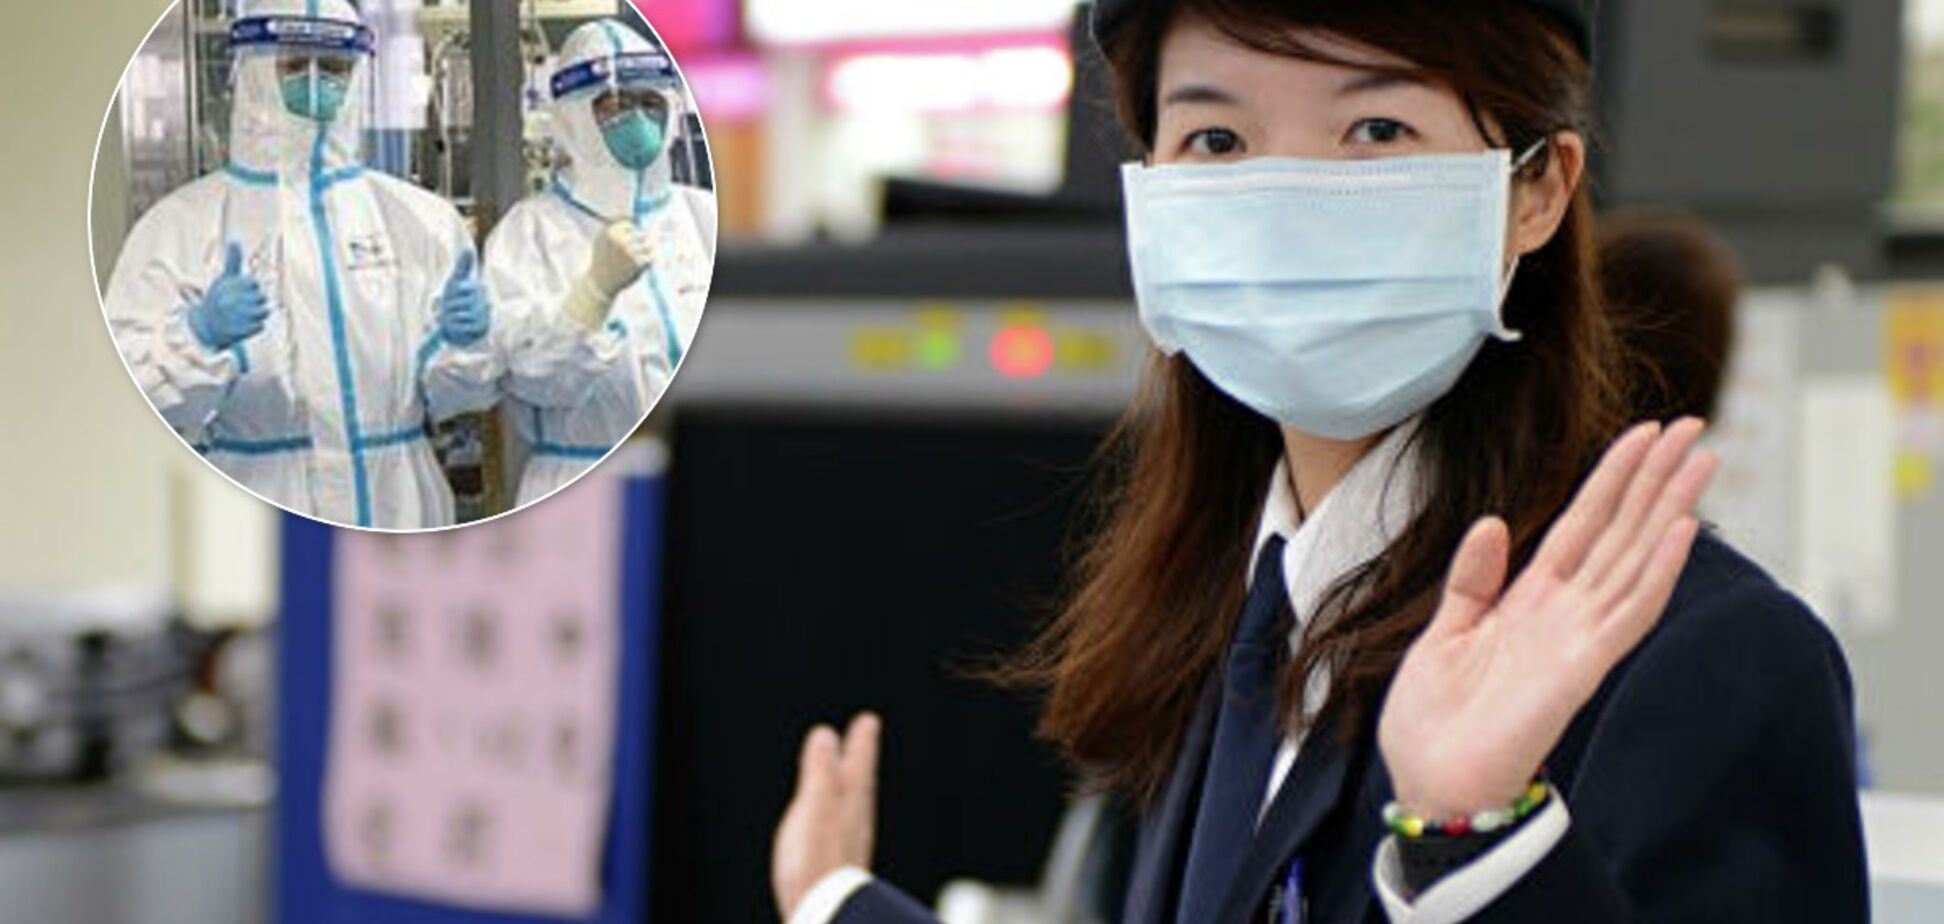 Китай почти поборол коронавирус: озвучена победная статистика